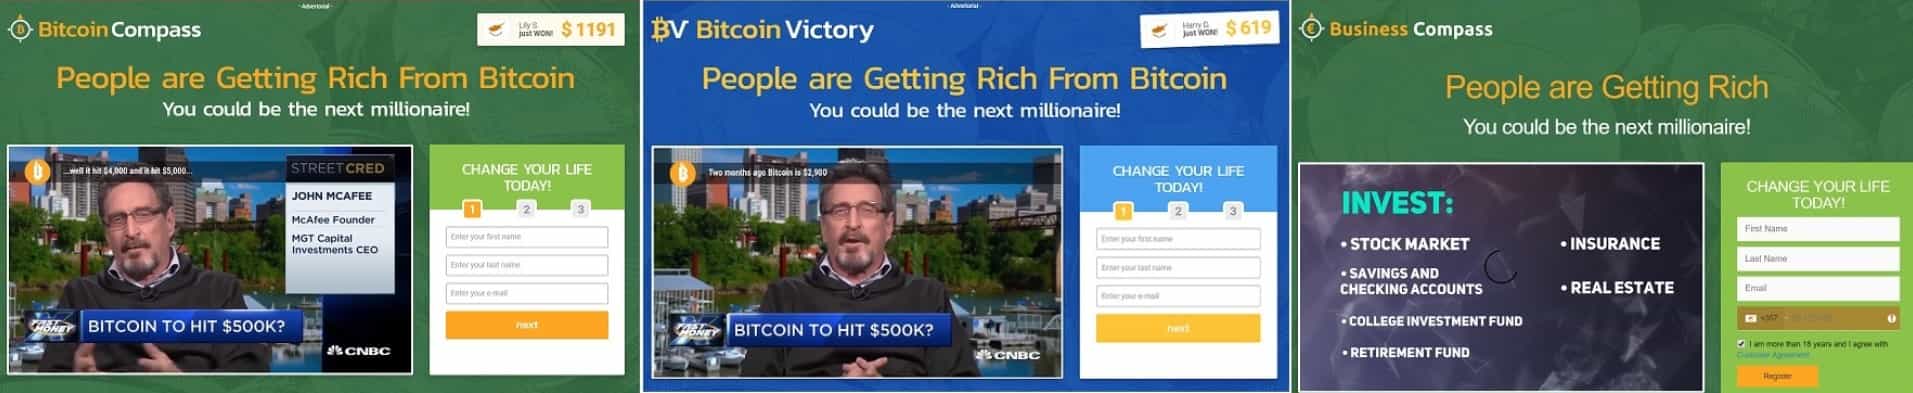 Bitcoin Victory suck